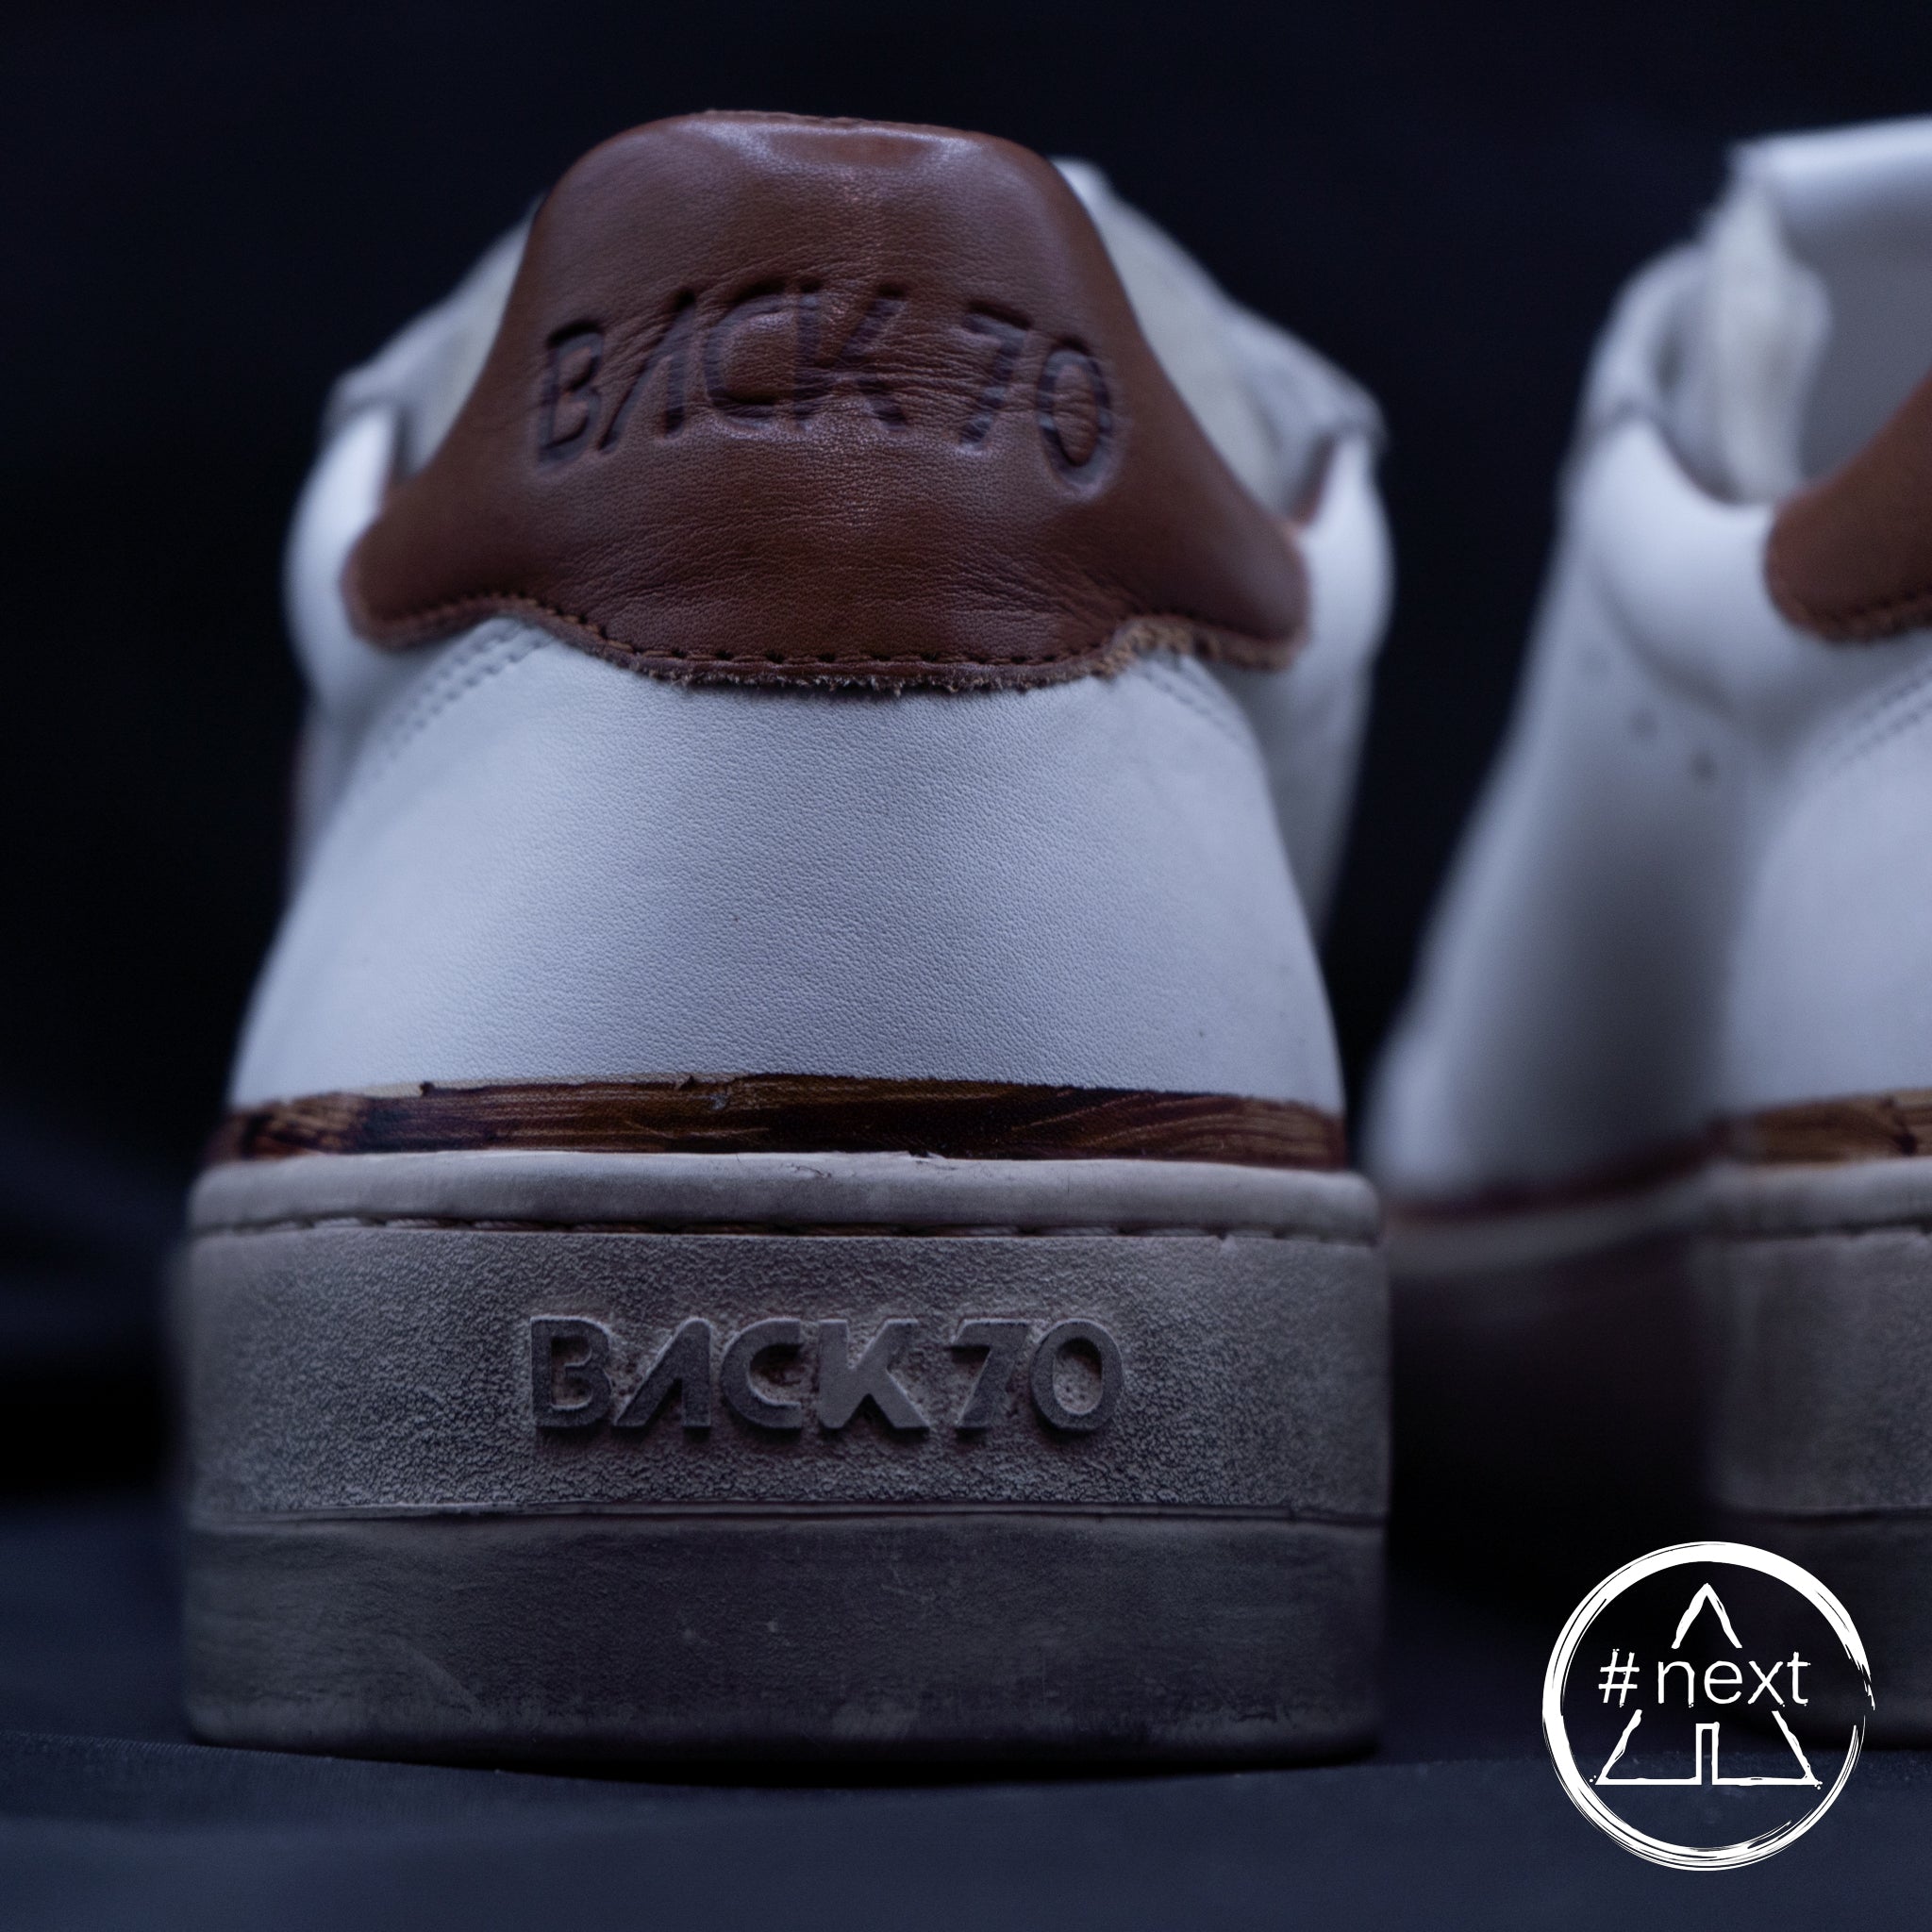 BACK70 - (#B) Sneakers SLAM - Savana, marrone.